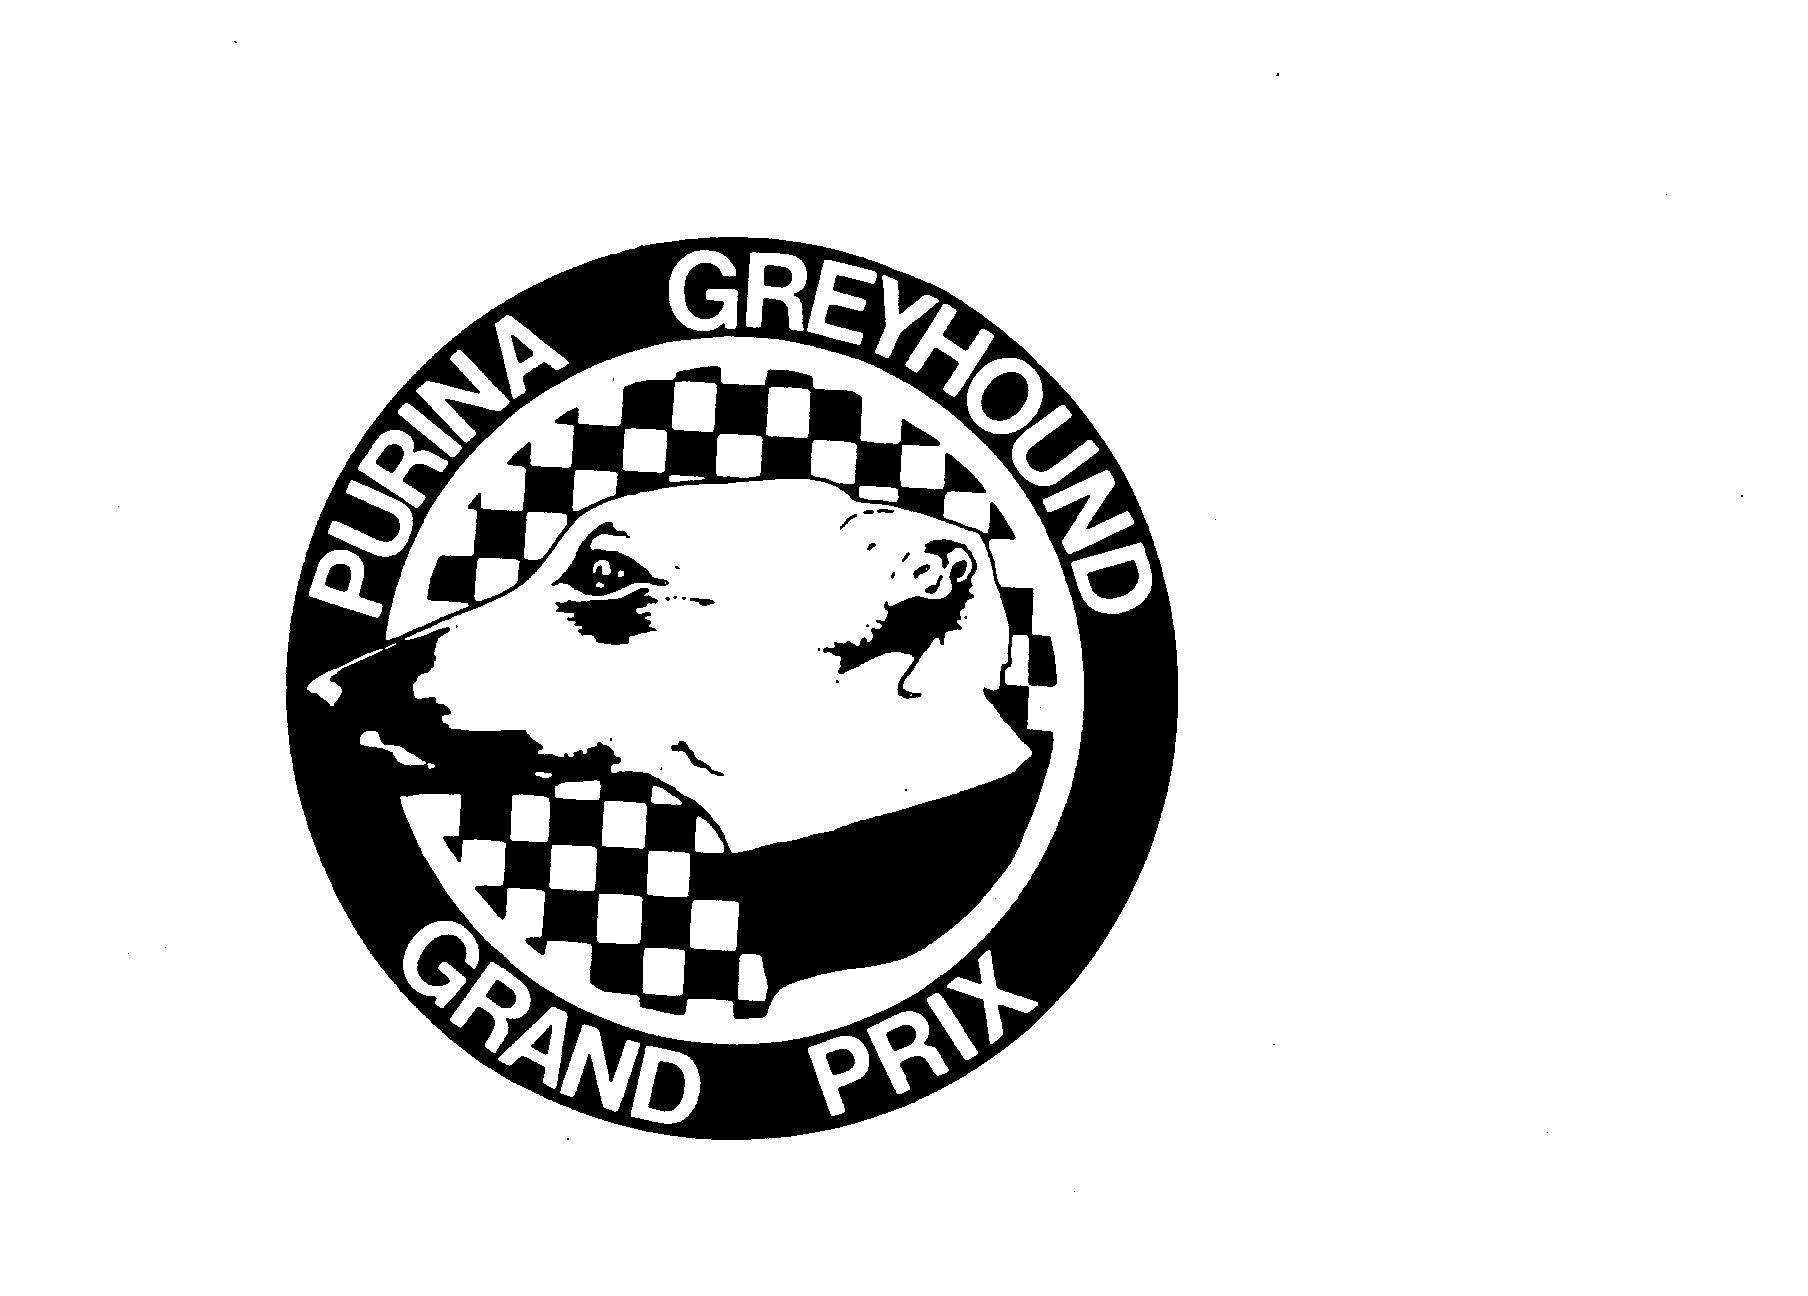  PURINA GREYHOUND GRAND PRIX